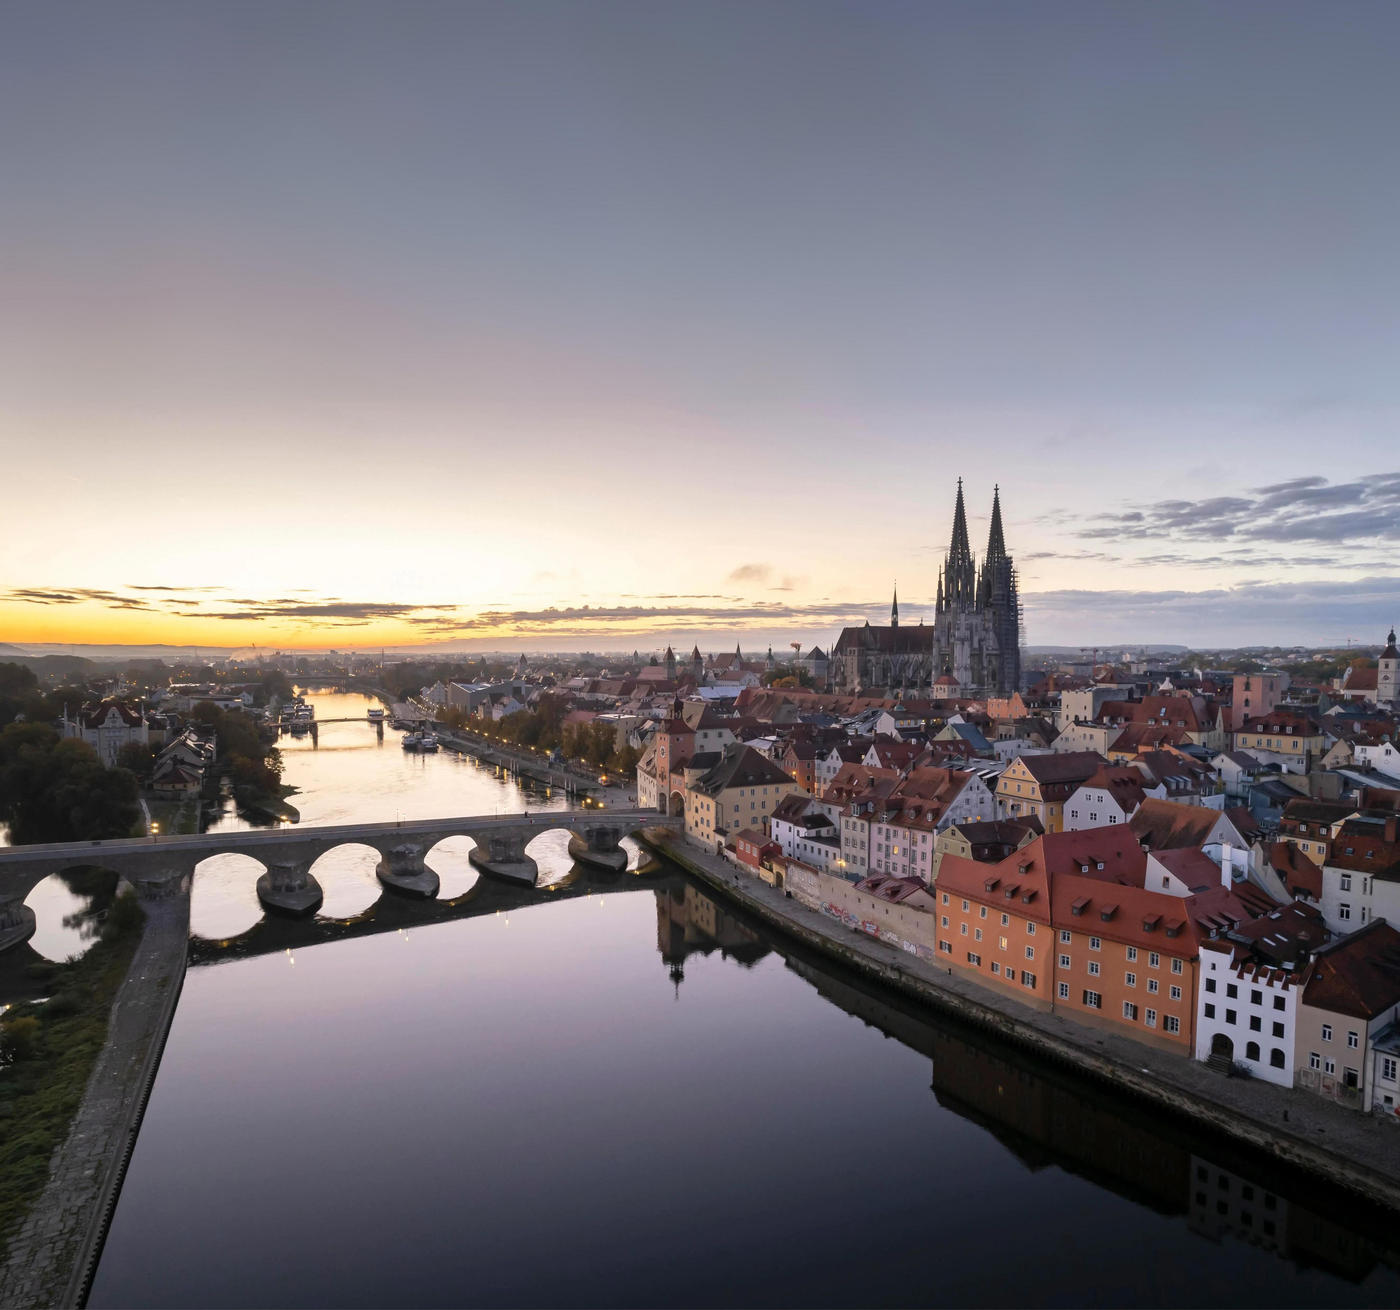 Regensburg: Historie trifft Moderne